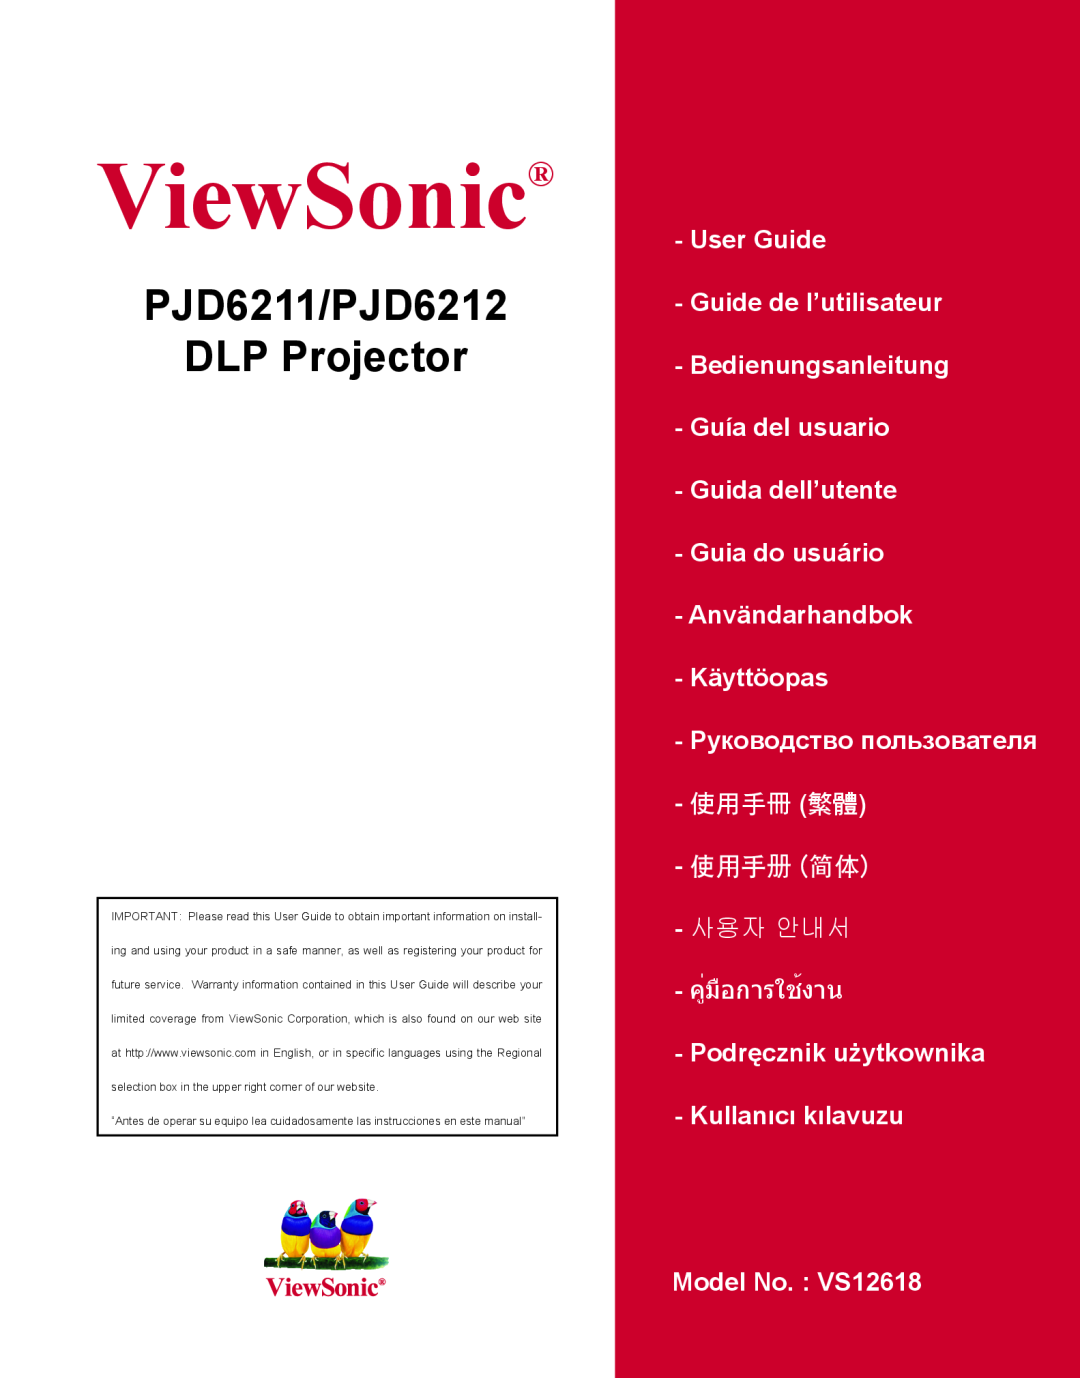 ViewSonic warranty PJD6211/PJD6212 DLP Projector, ViewSonic, User Guide Guide de l’utilisateur Bedienungsanleitung 